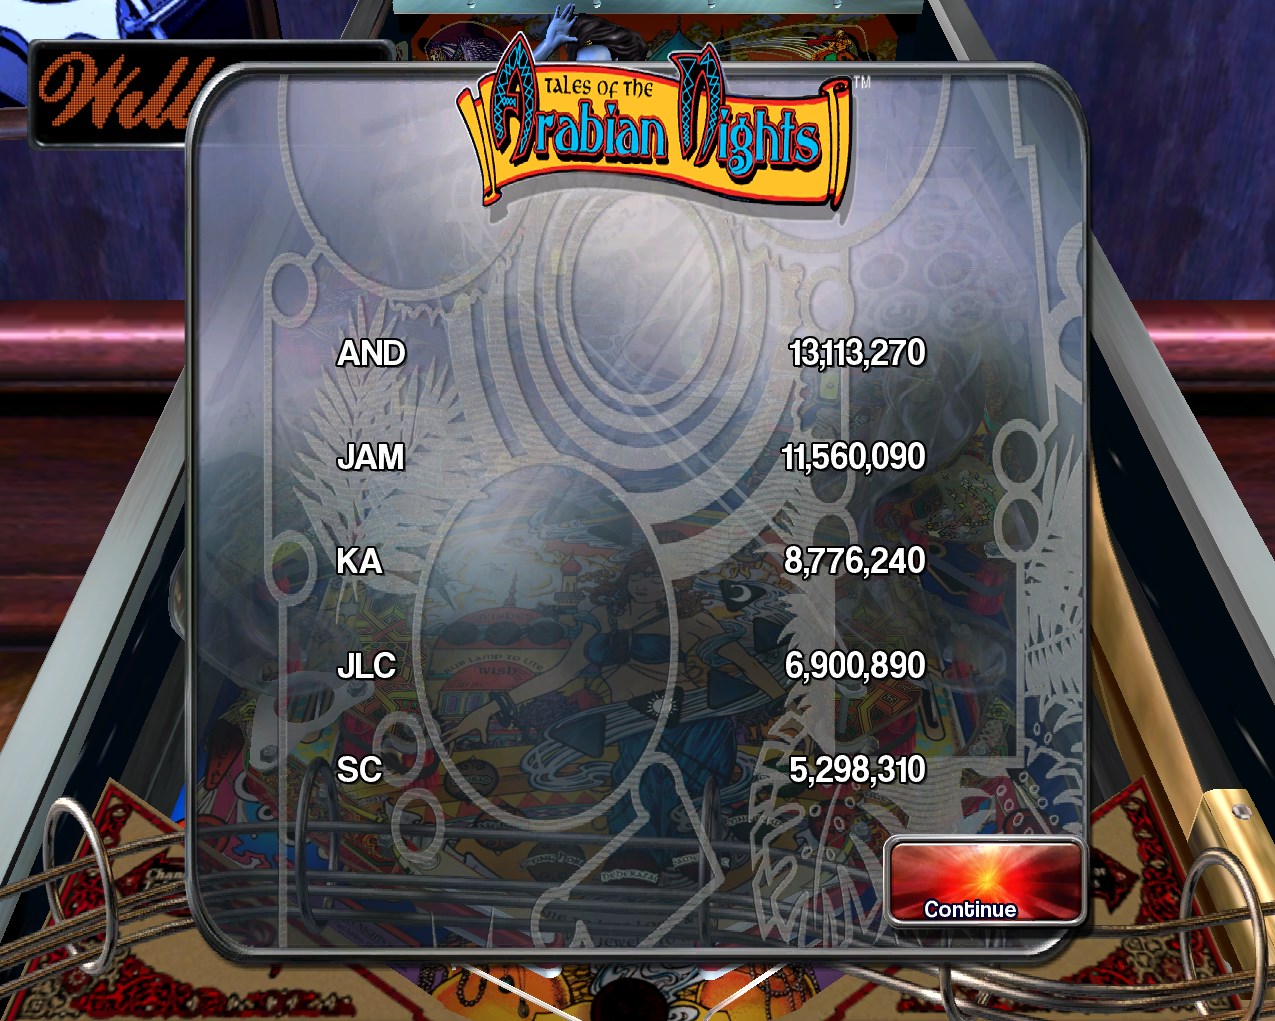 Jigg: Pinball Arcade: Tales of the Arabian Nights [3 balls] (PC) 13,113,270 points on 2015-05-02 10:35:57